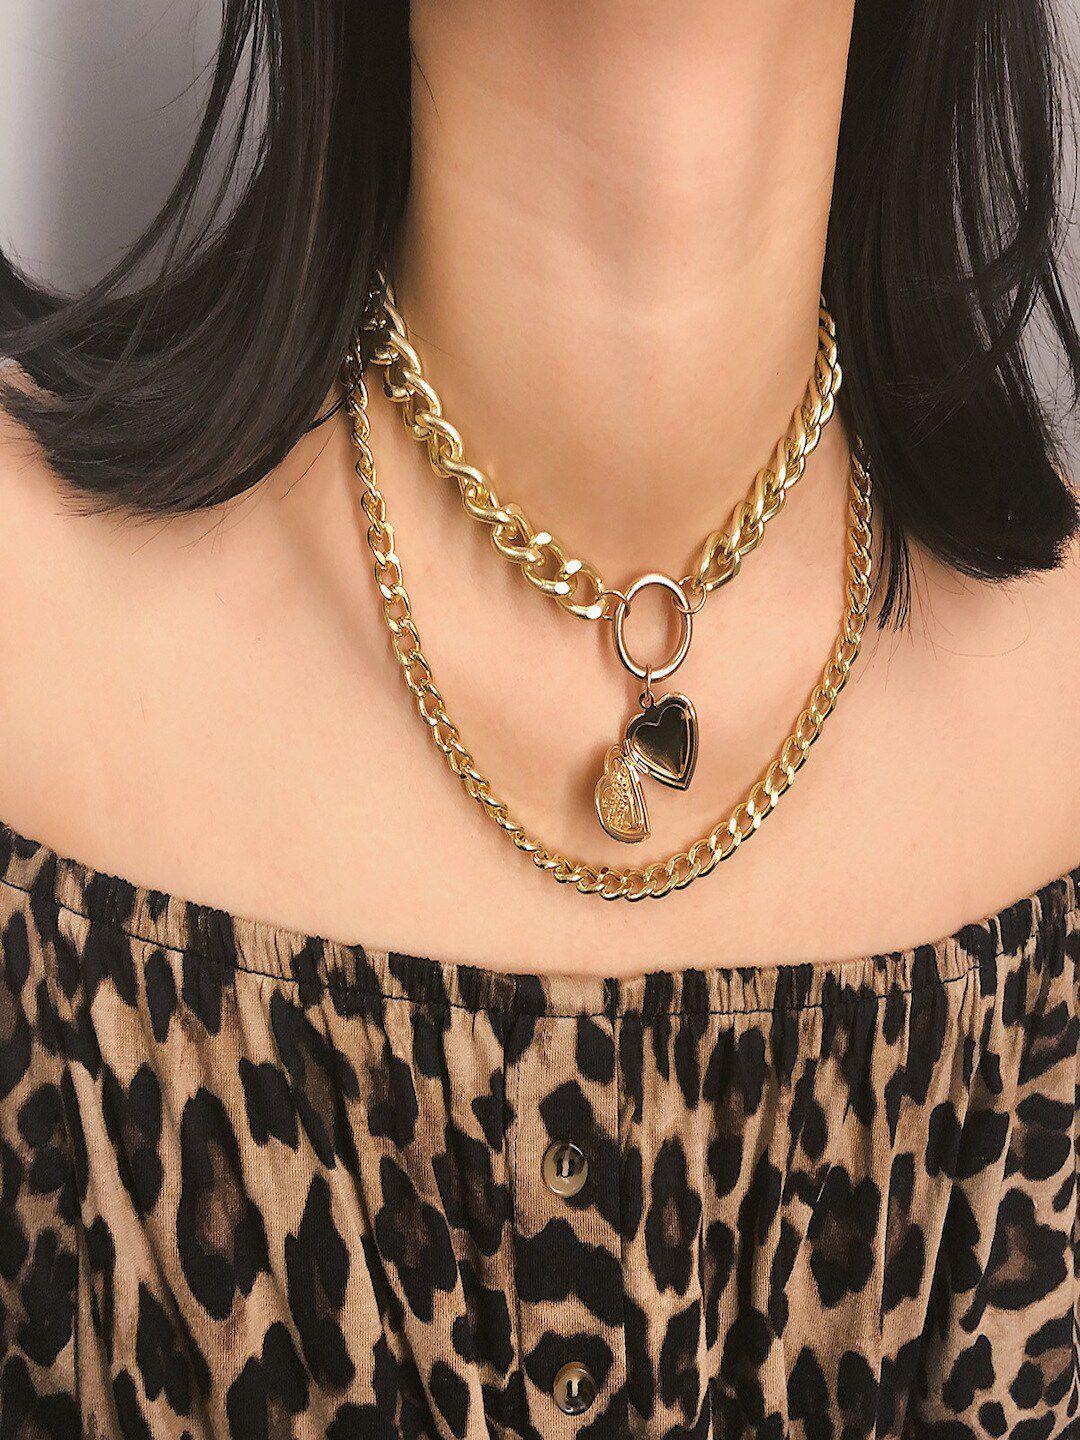 aquastreet women heart pendant gold-plated layered chain